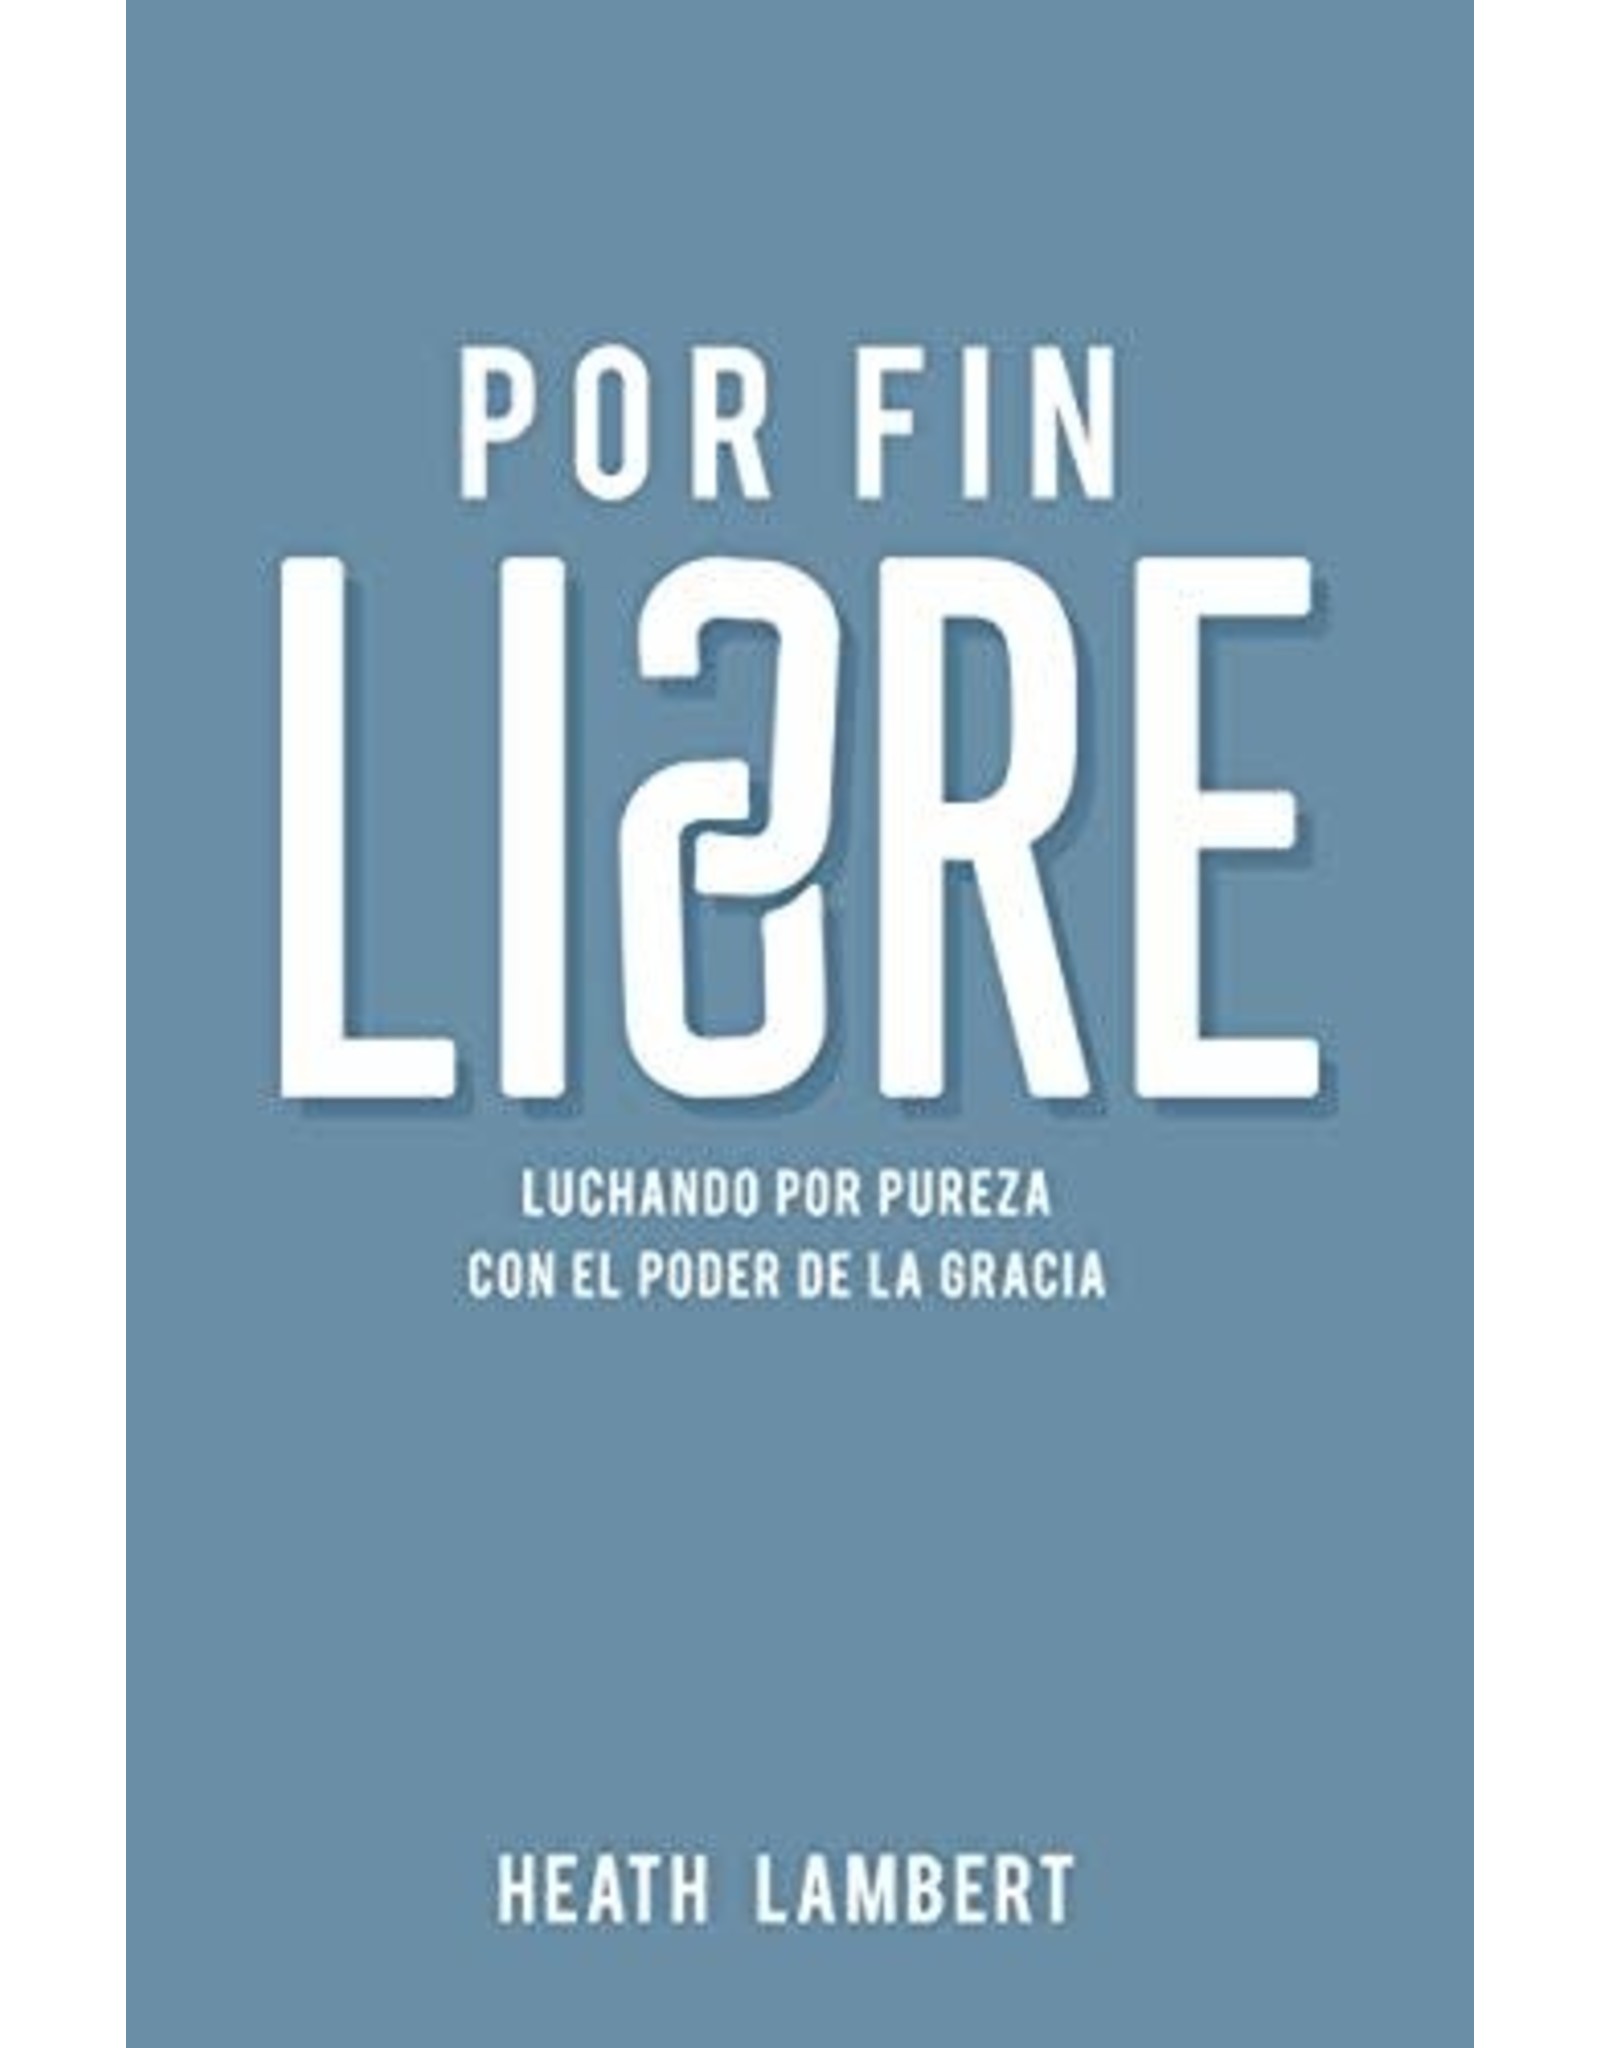 Poiema Por fin libre (Finally Free, Spanish)